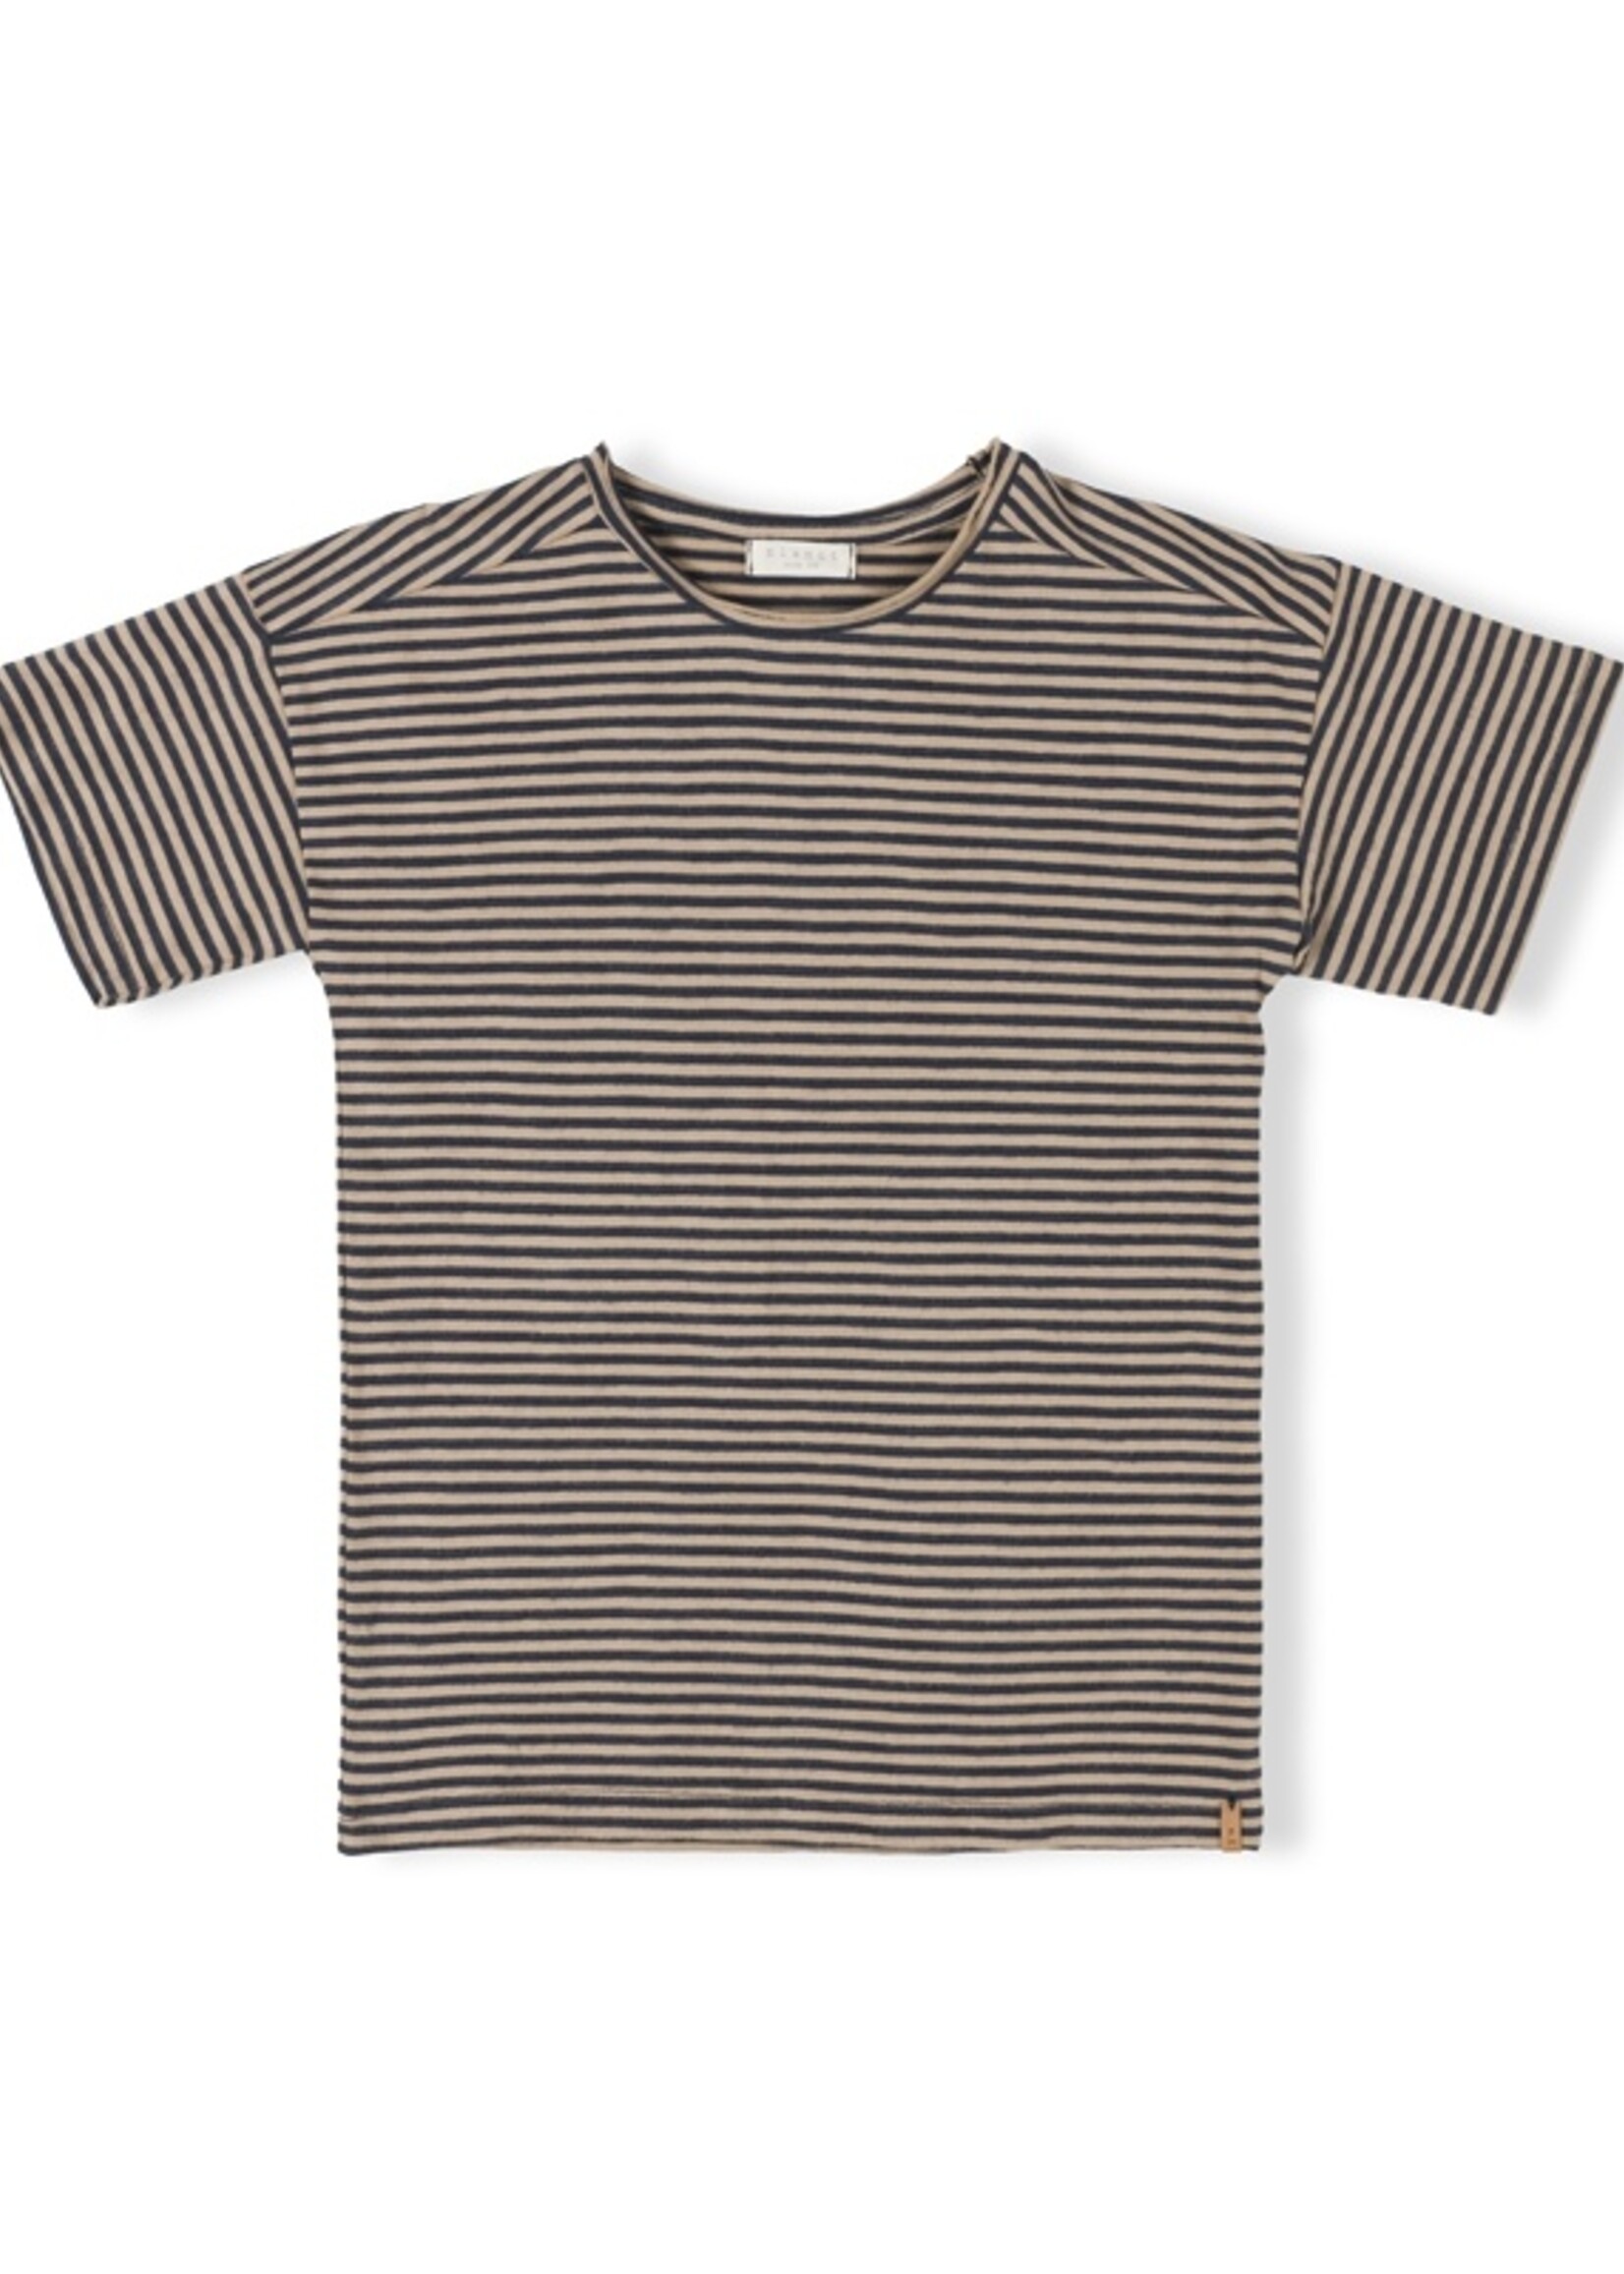 Nixnut Nixnut | Com Tshirt - Night Stripe